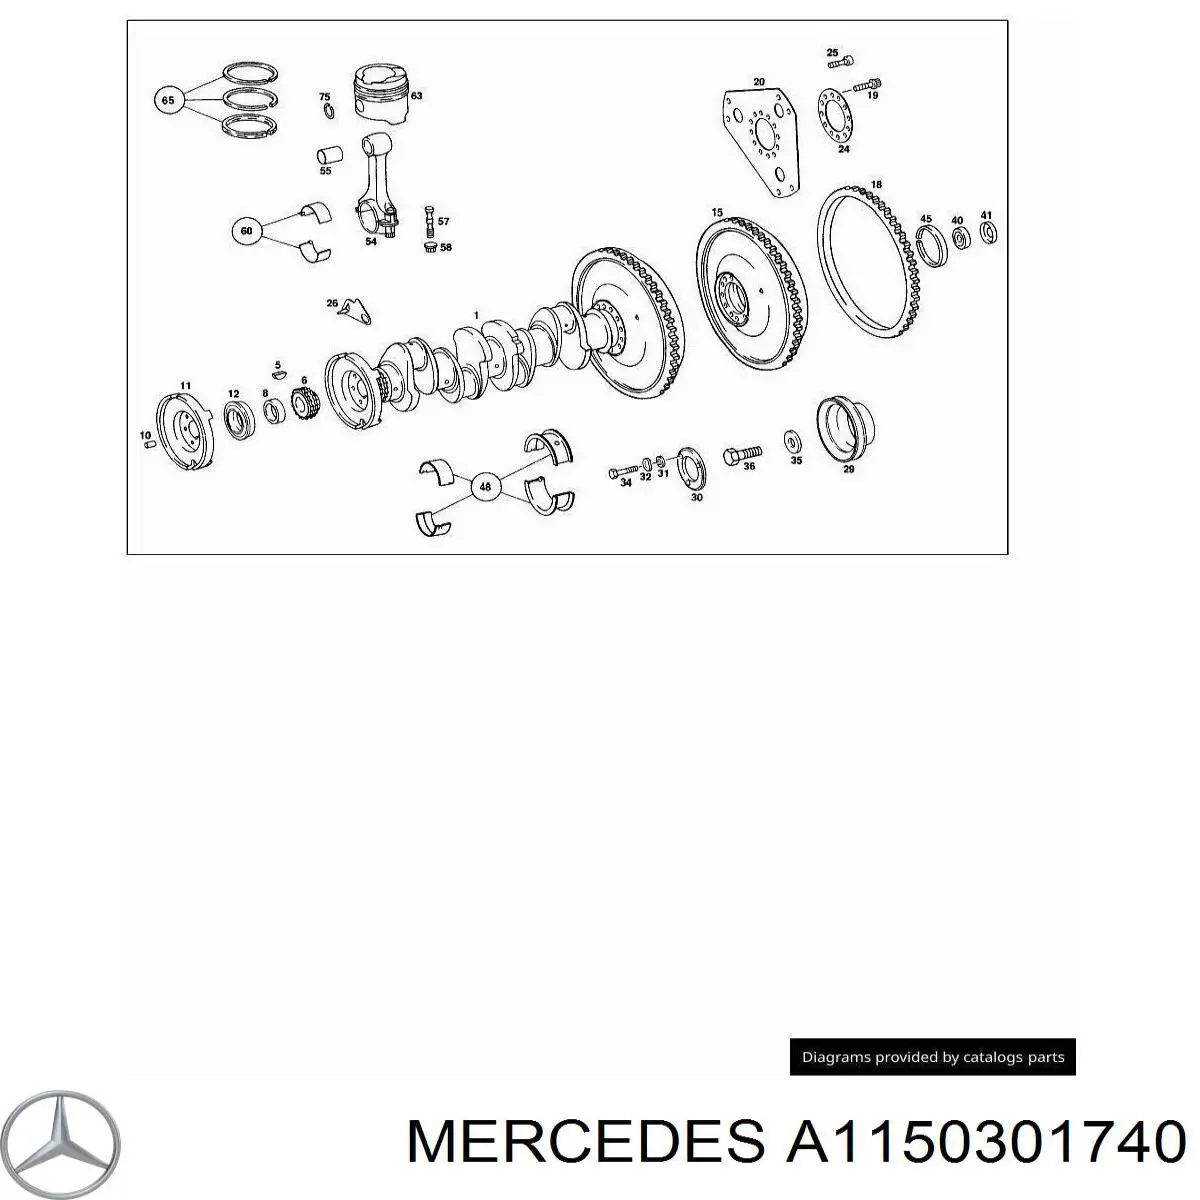 A1150301540 Mercedes вкладыши коленвала коренные, комплект, стандарт (std)